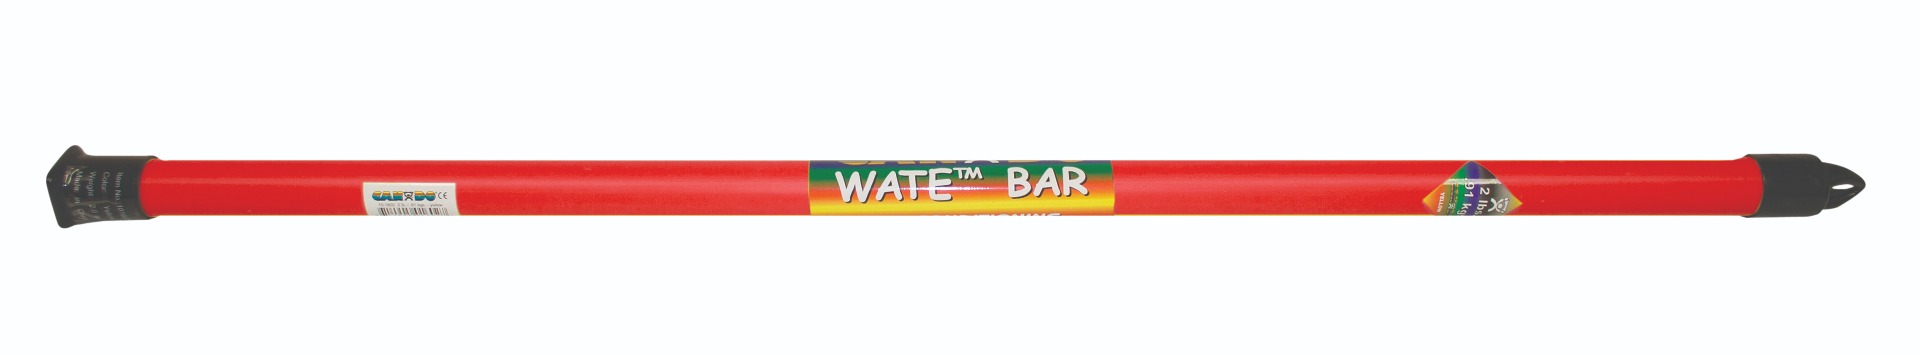 CanDo Slim WaTE Bar